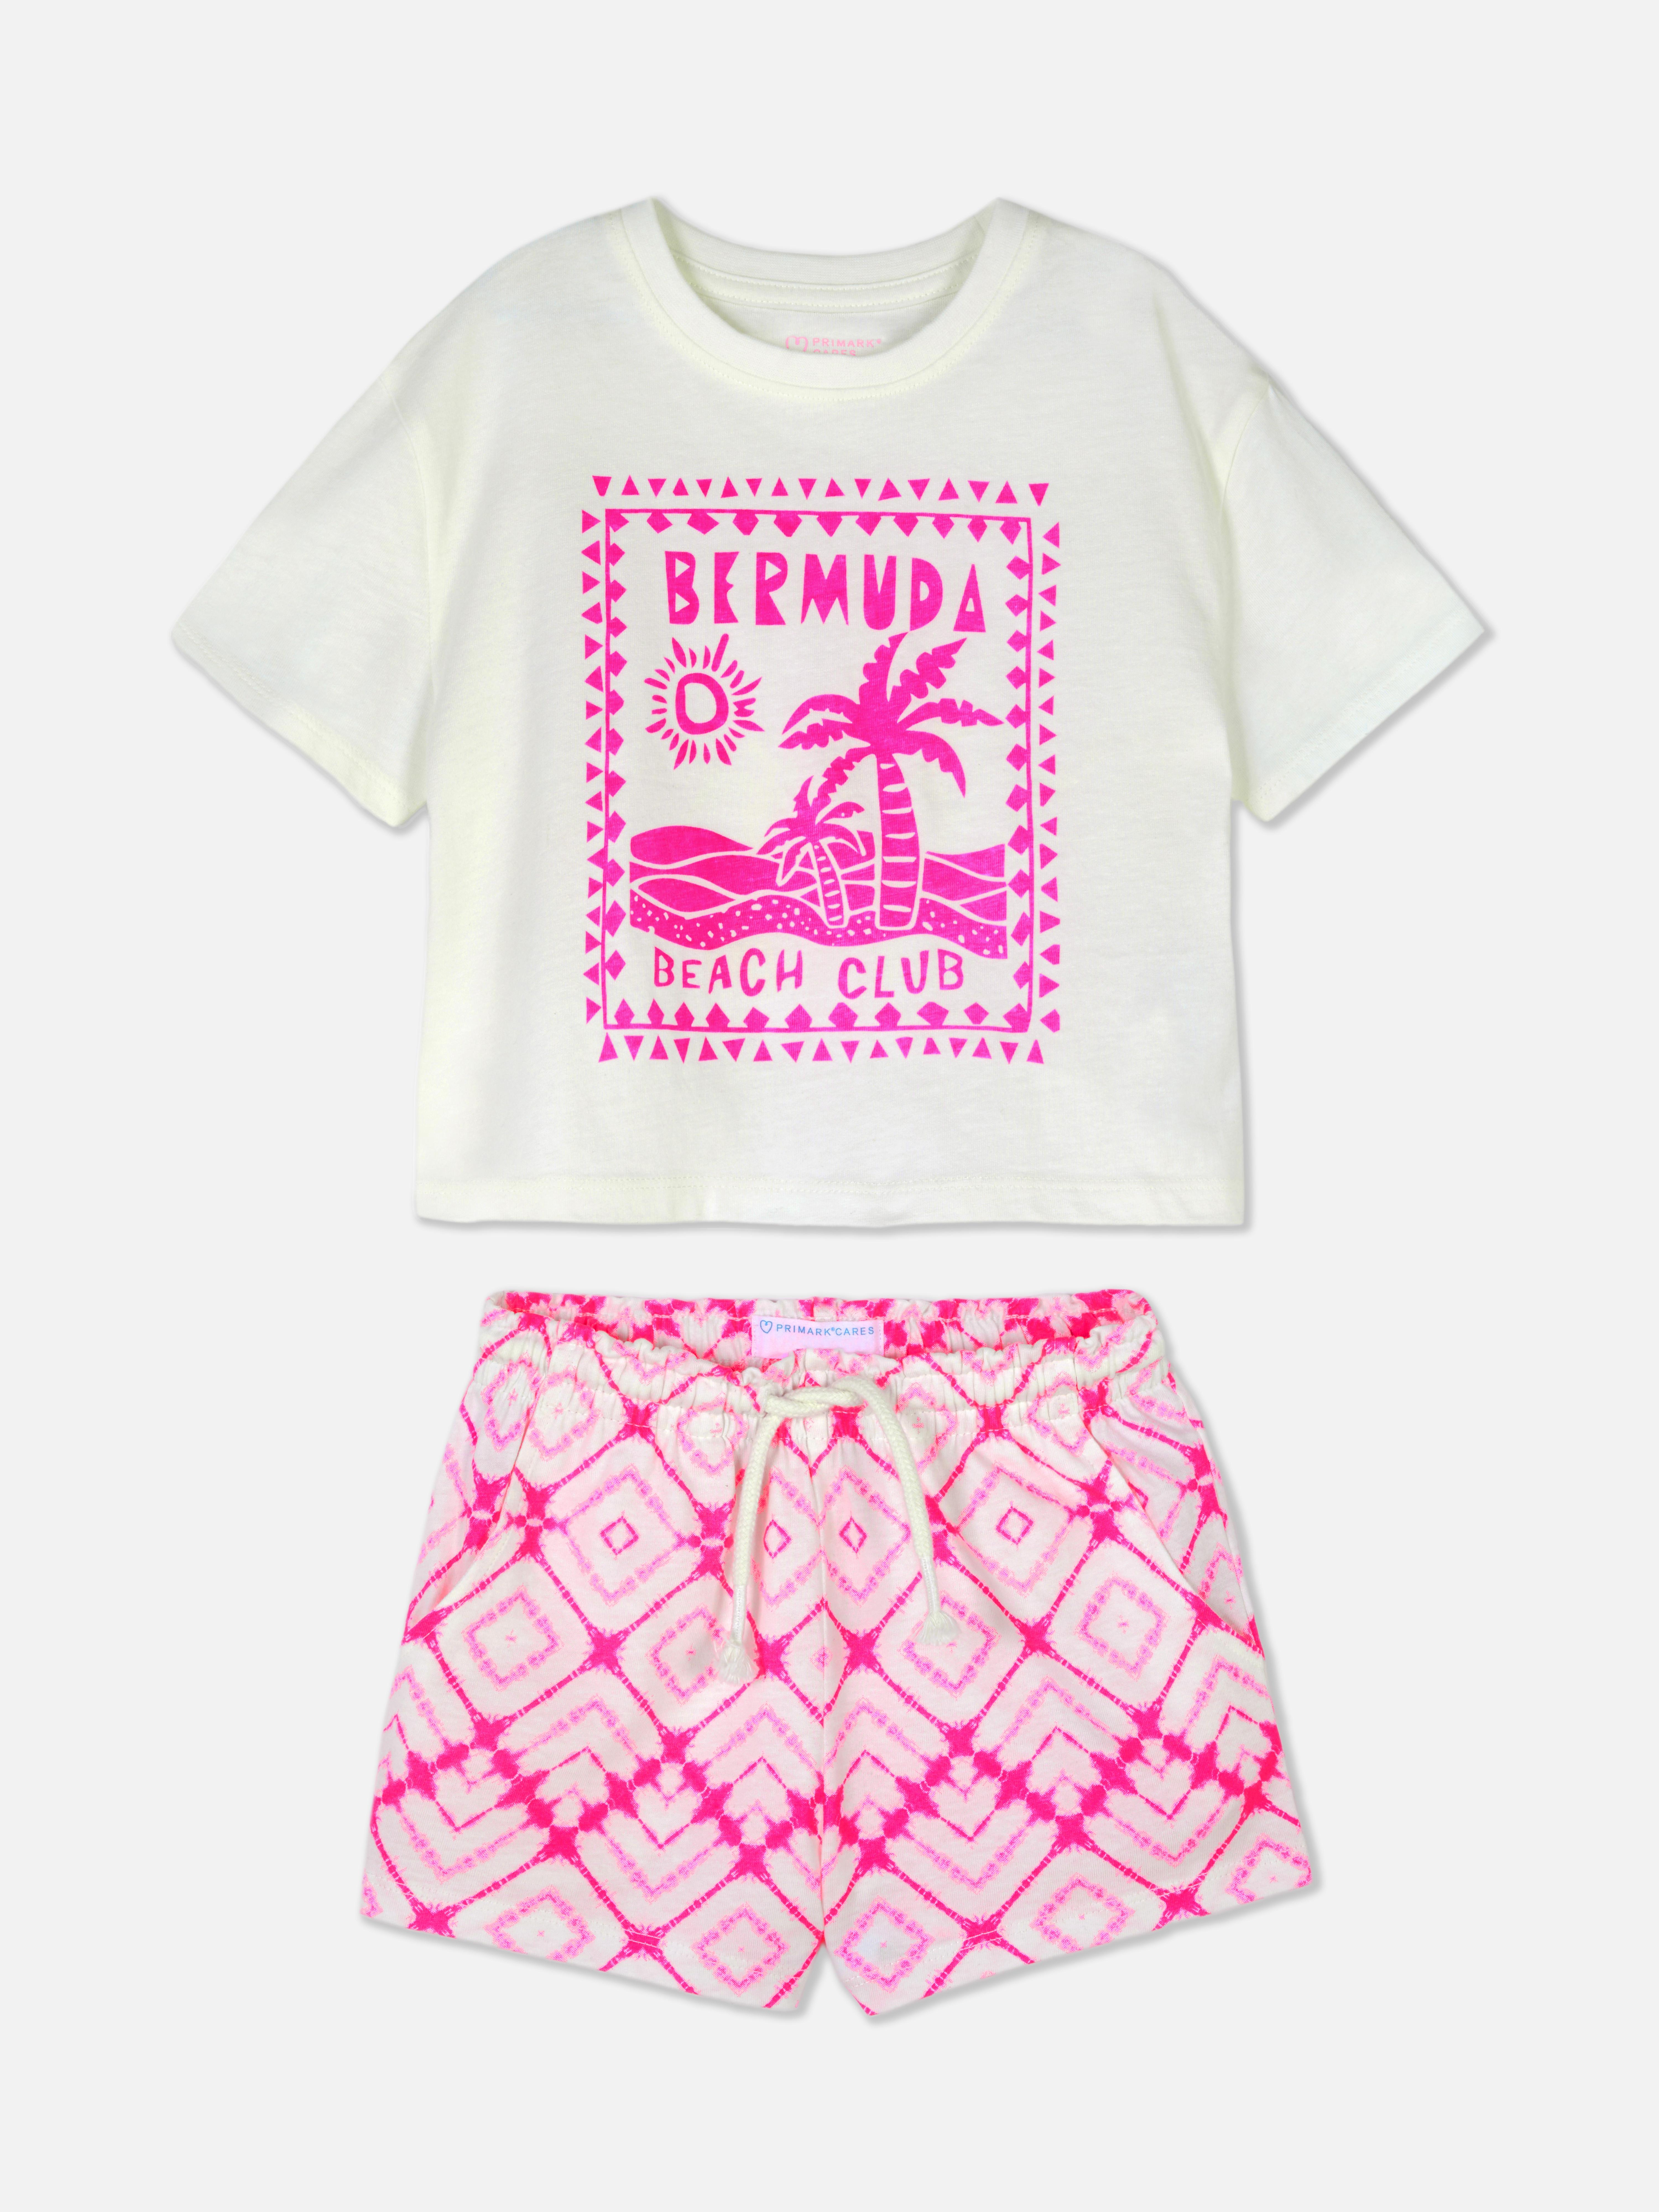 Bermuda Beach Club T-Shirt and Shorts Set